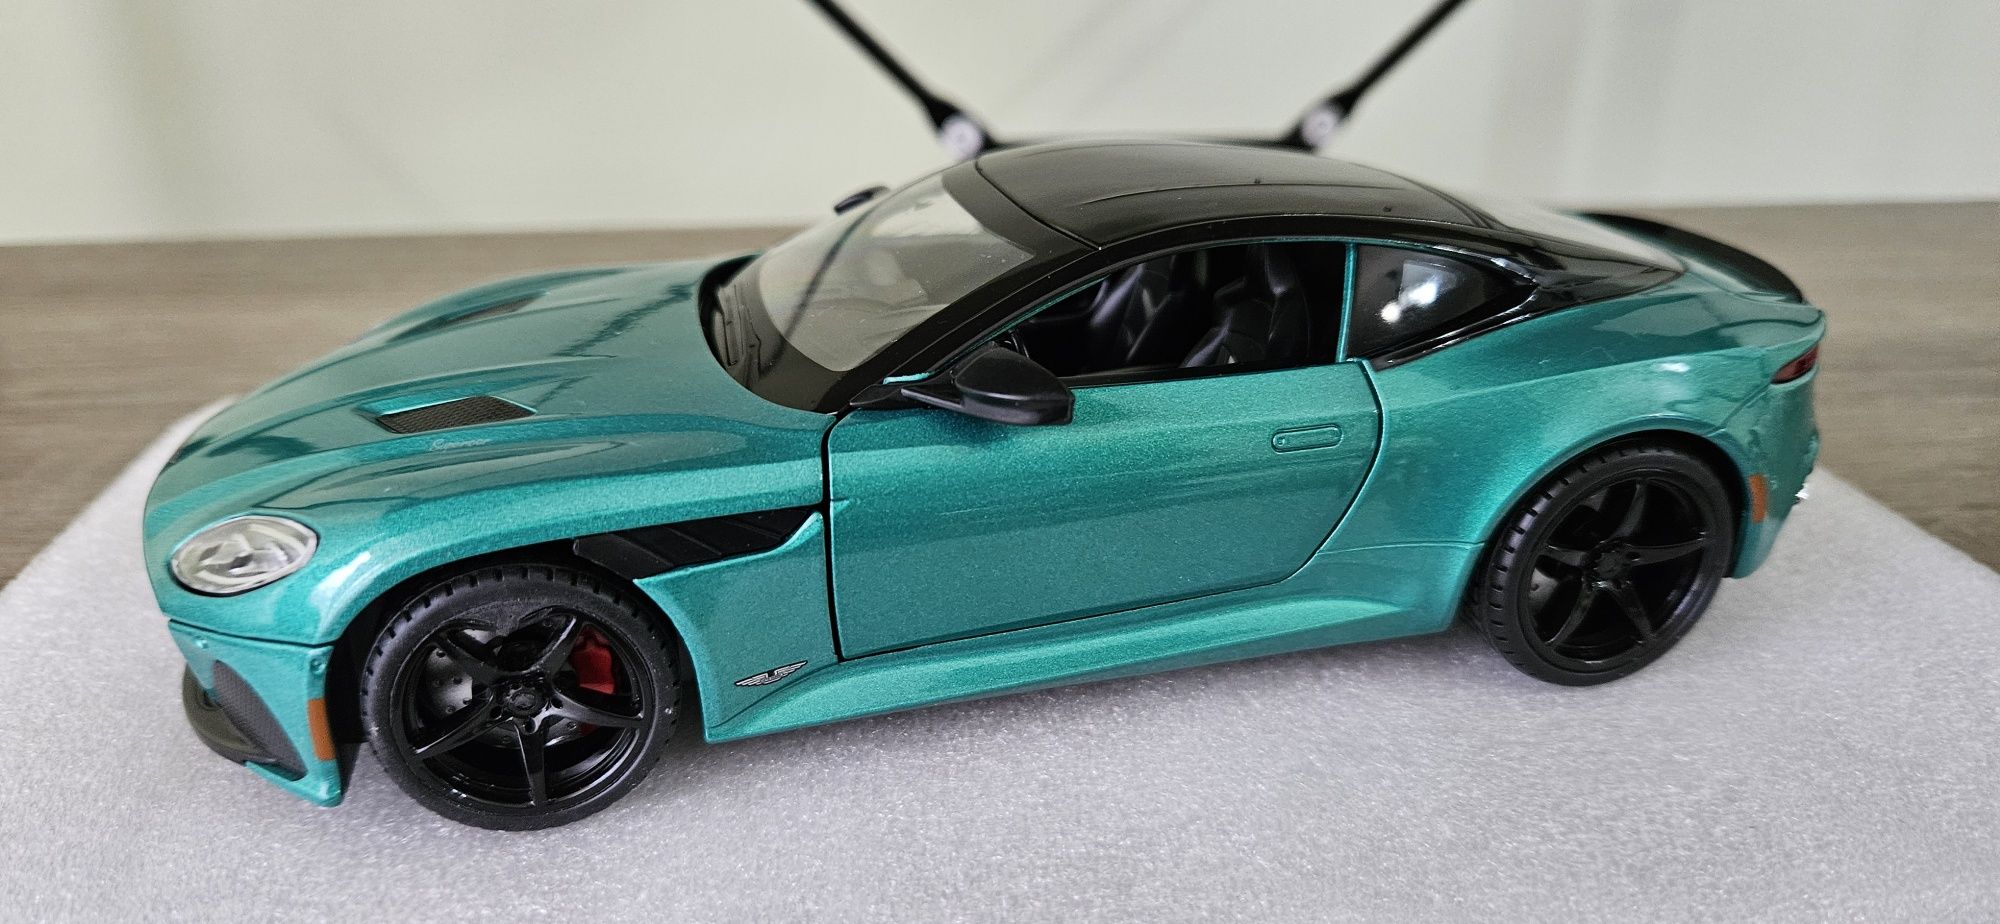 Macheta 1:24, Aston Martin DBS